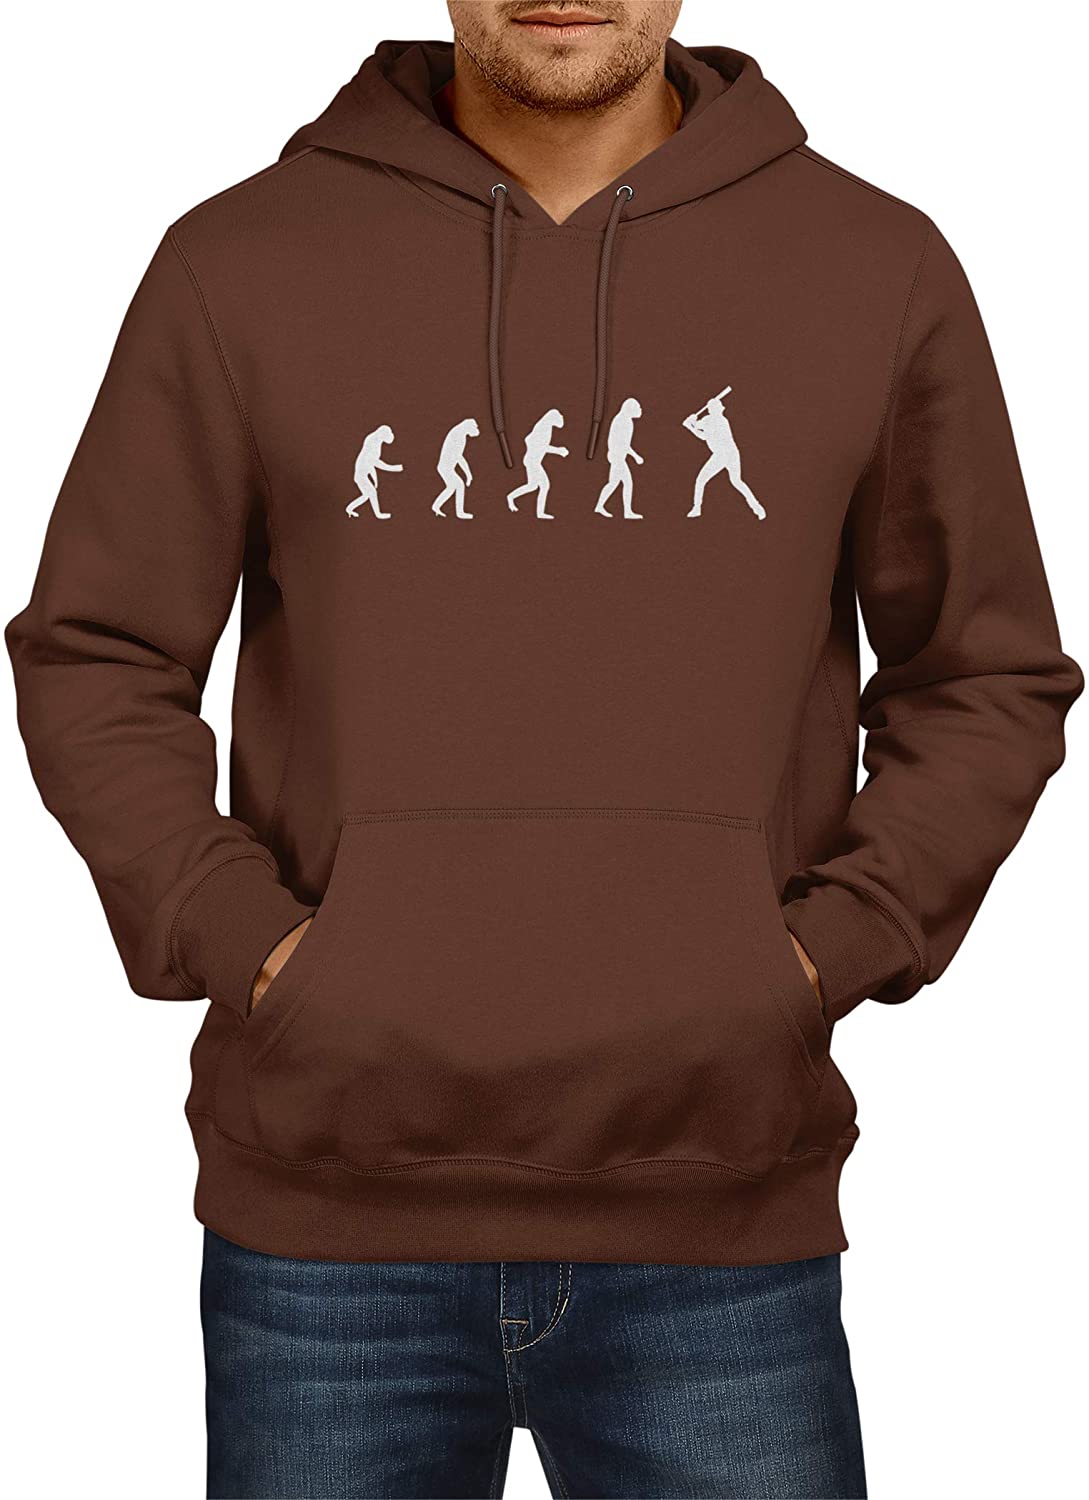 NXY Men's Evolution of Man to Baseball Player Hoodie Sweatshirt